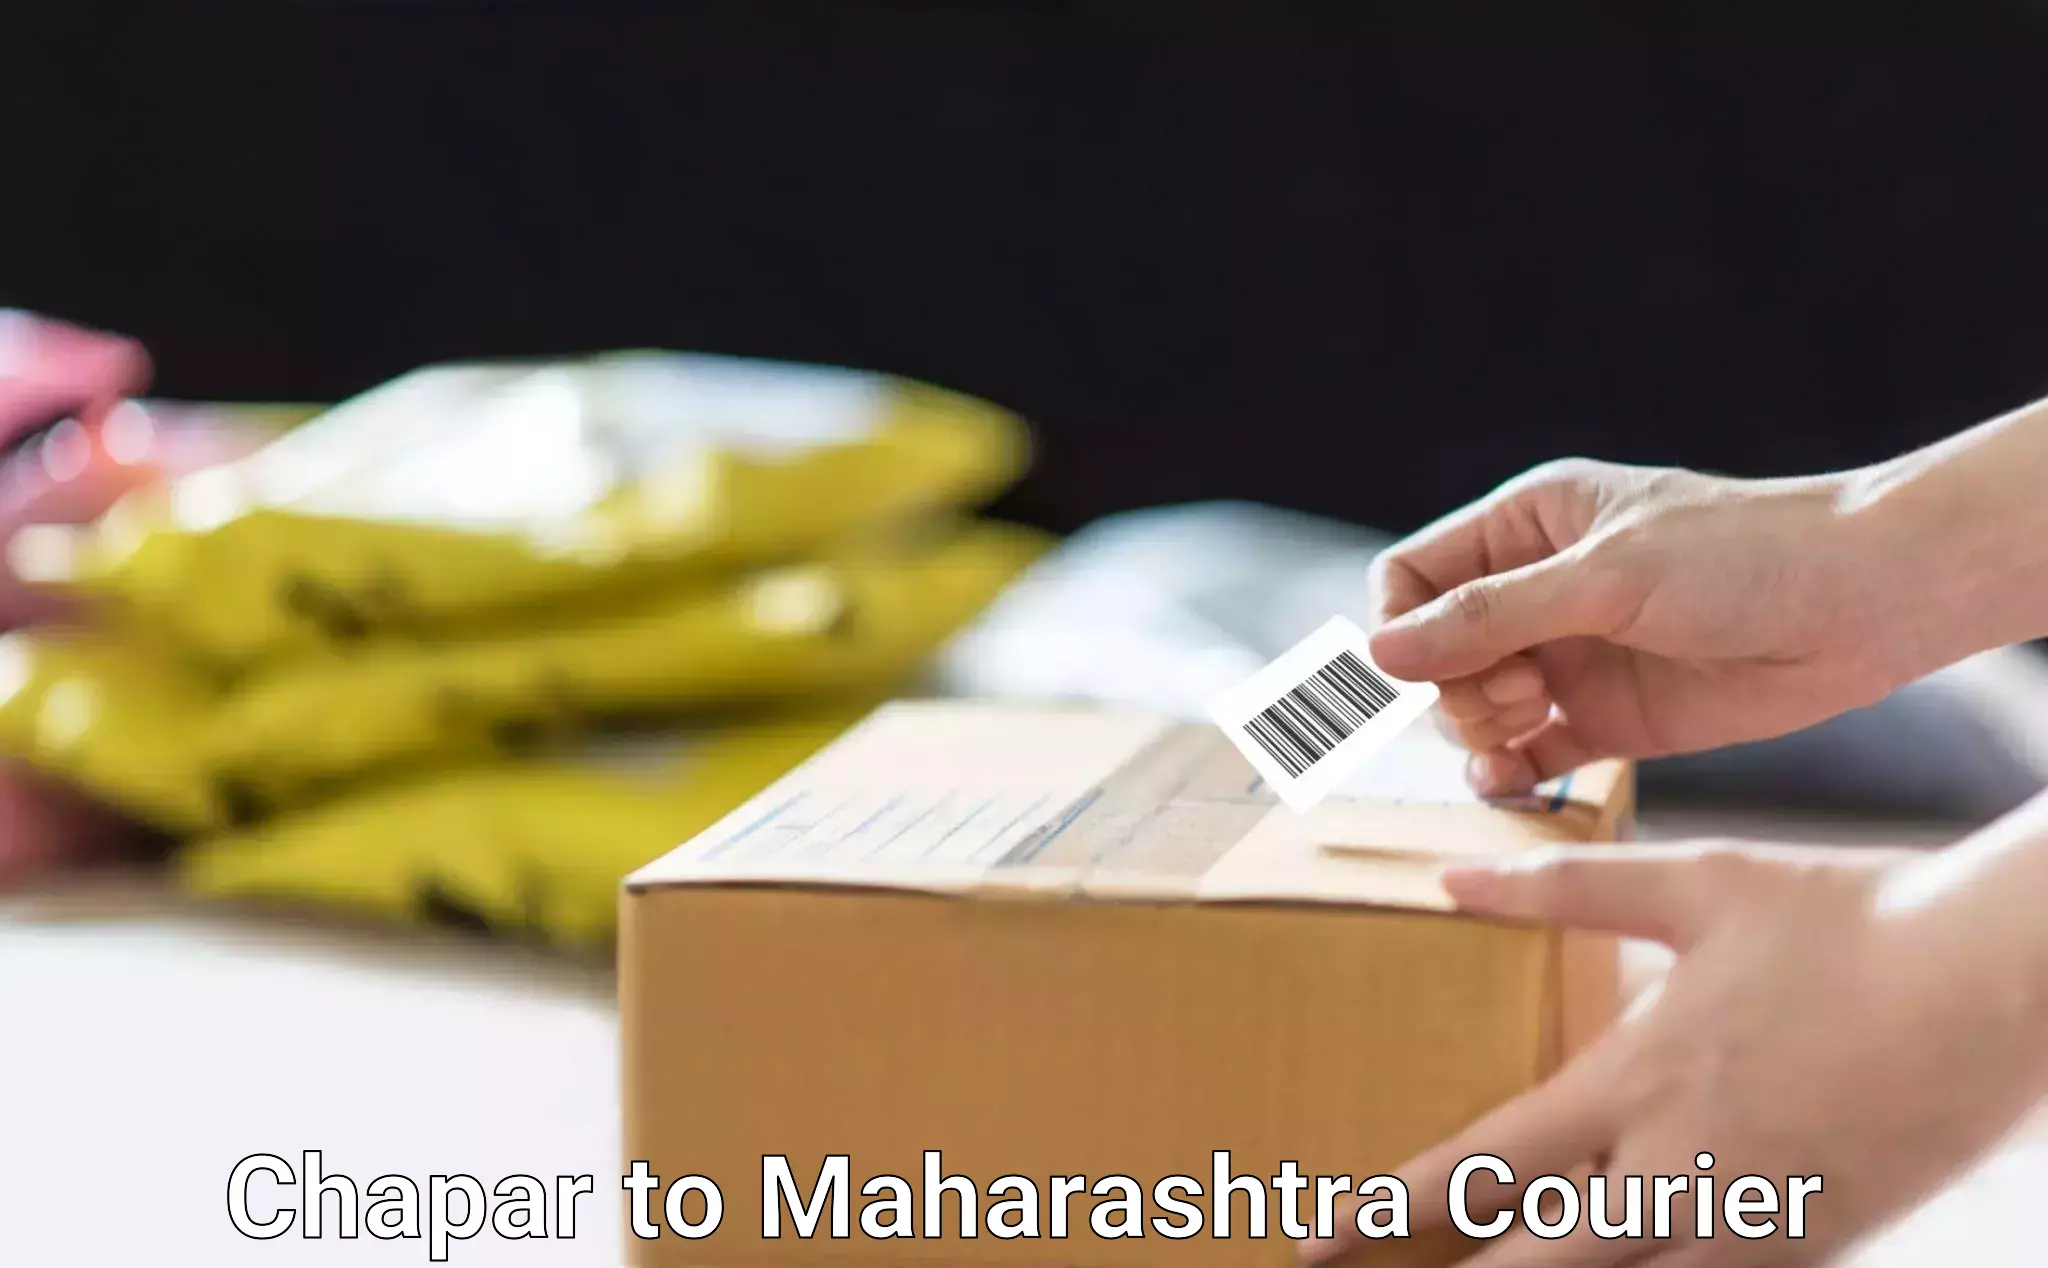 Bulk courier orders Chapar to Maharashtra